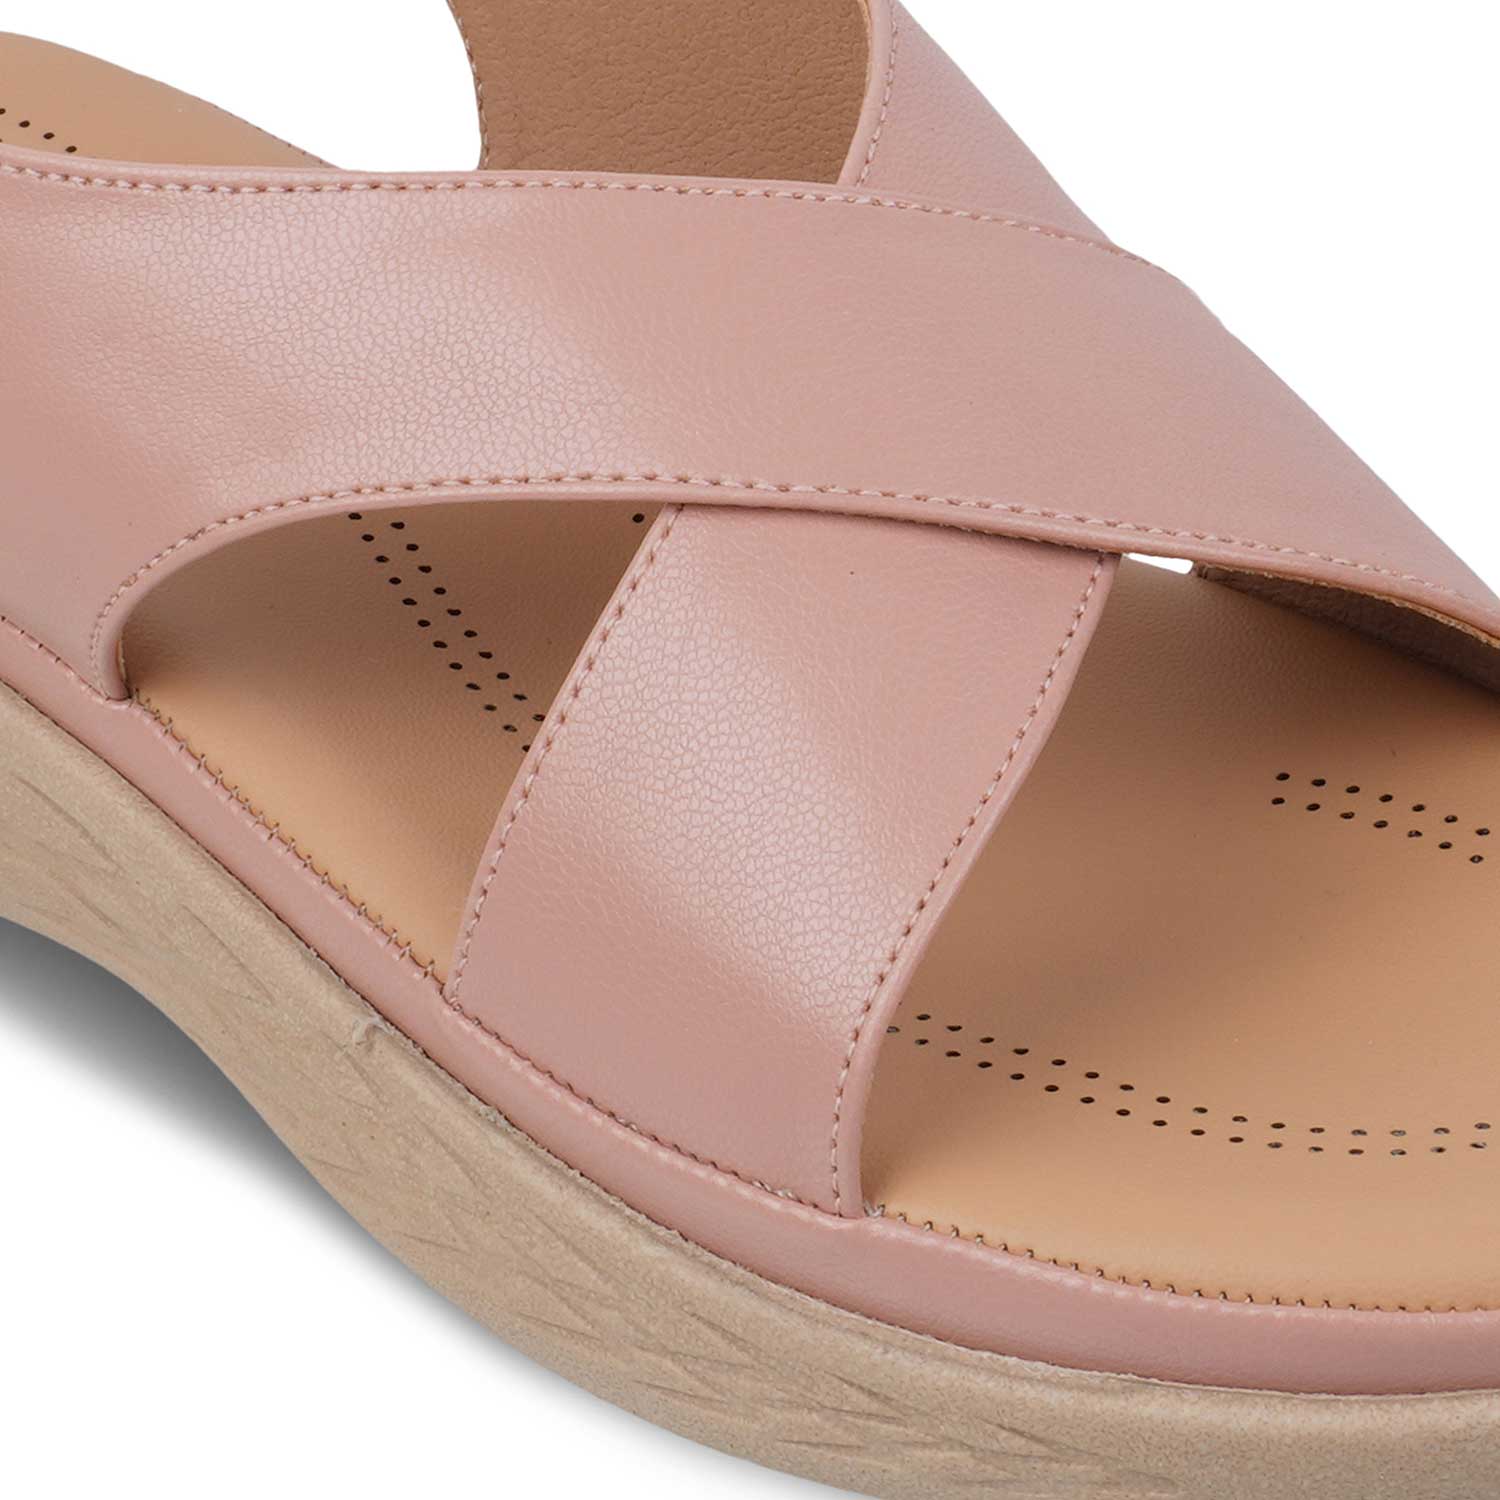 The Havit Pink Women's Casual Wedge Sandals Tresmode